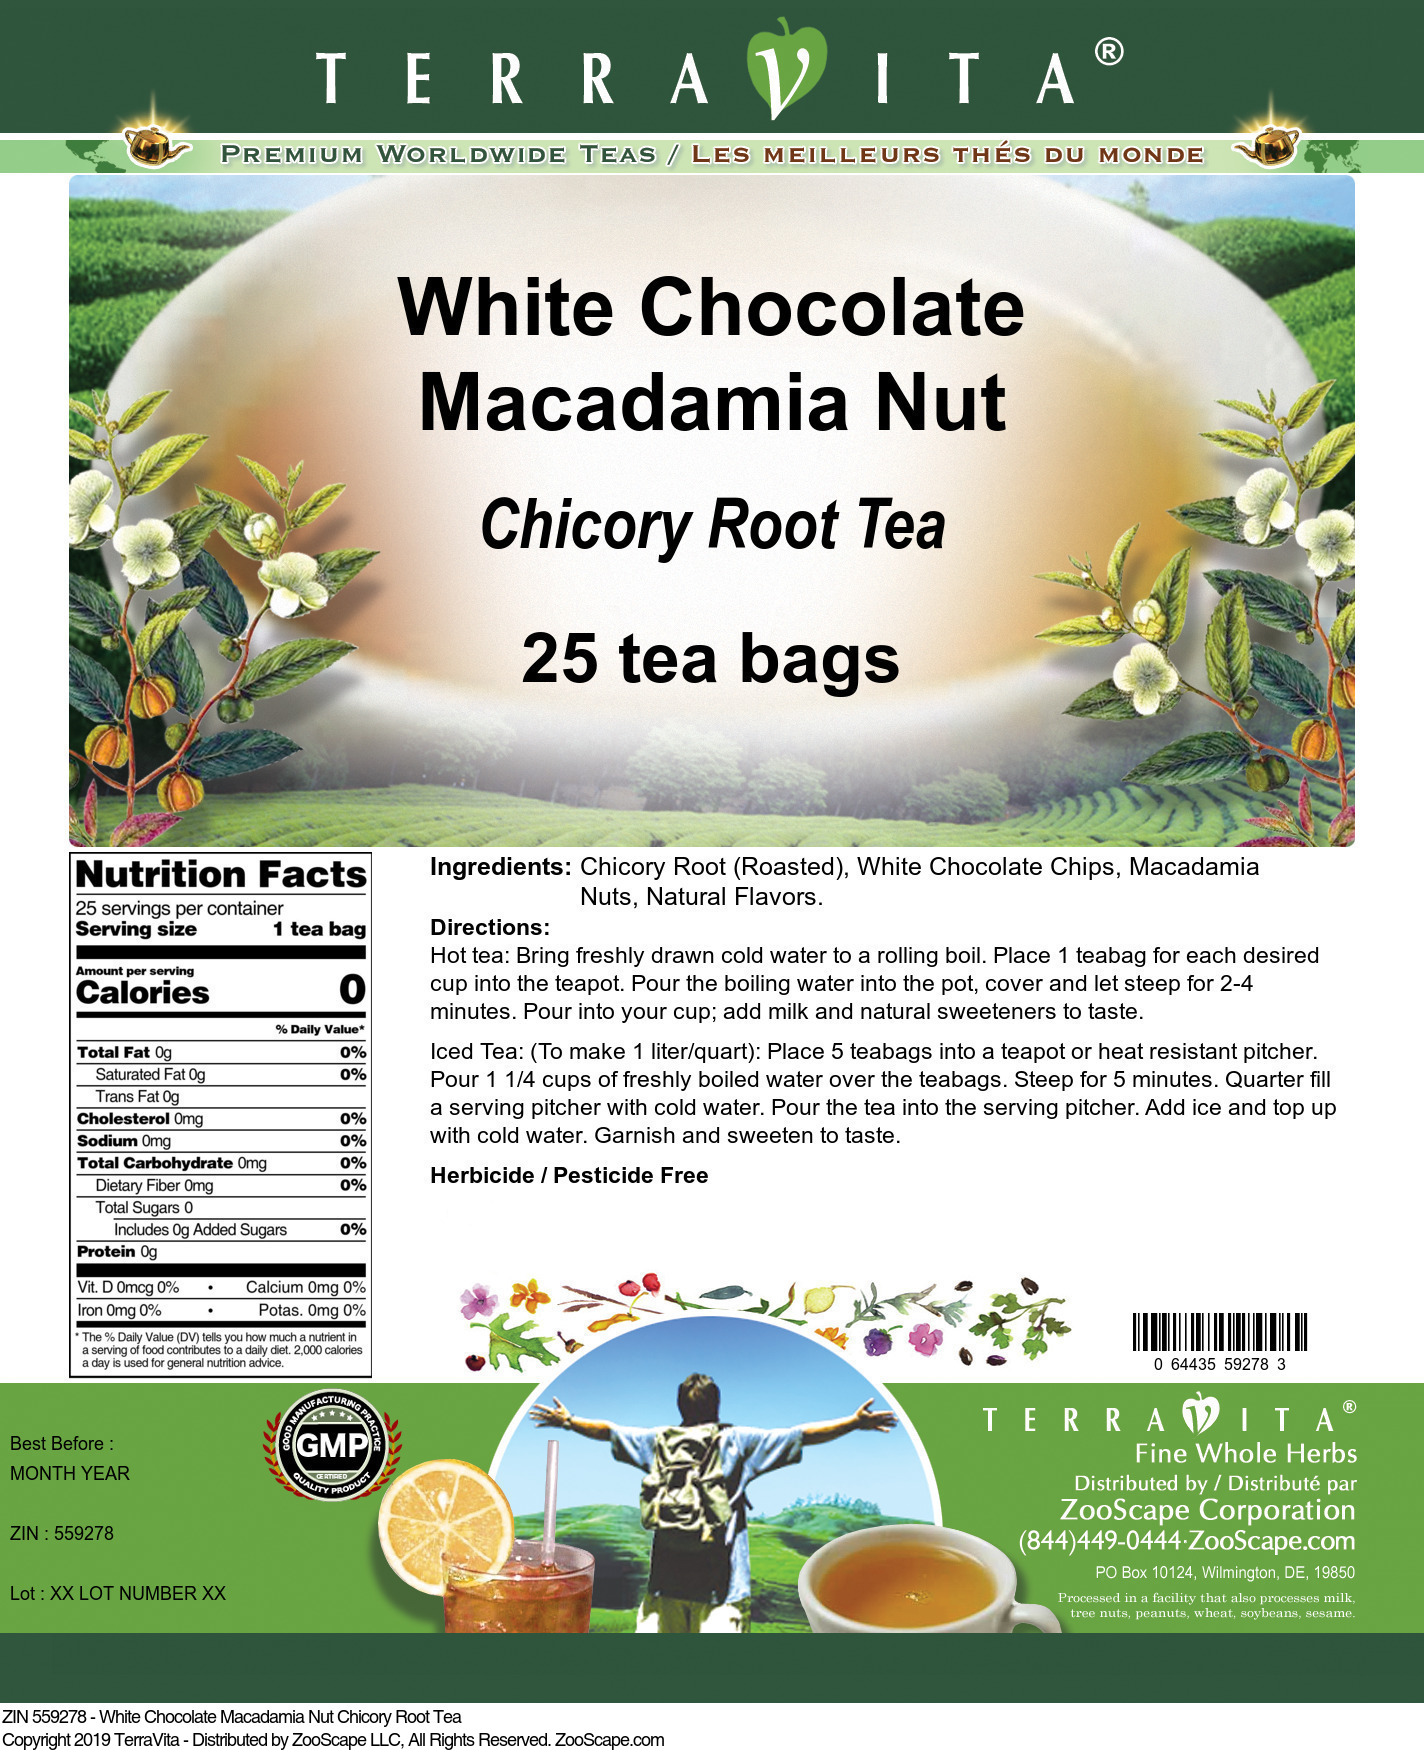 White Chocolate Macadamia Nut Chicory Root Tea - Label